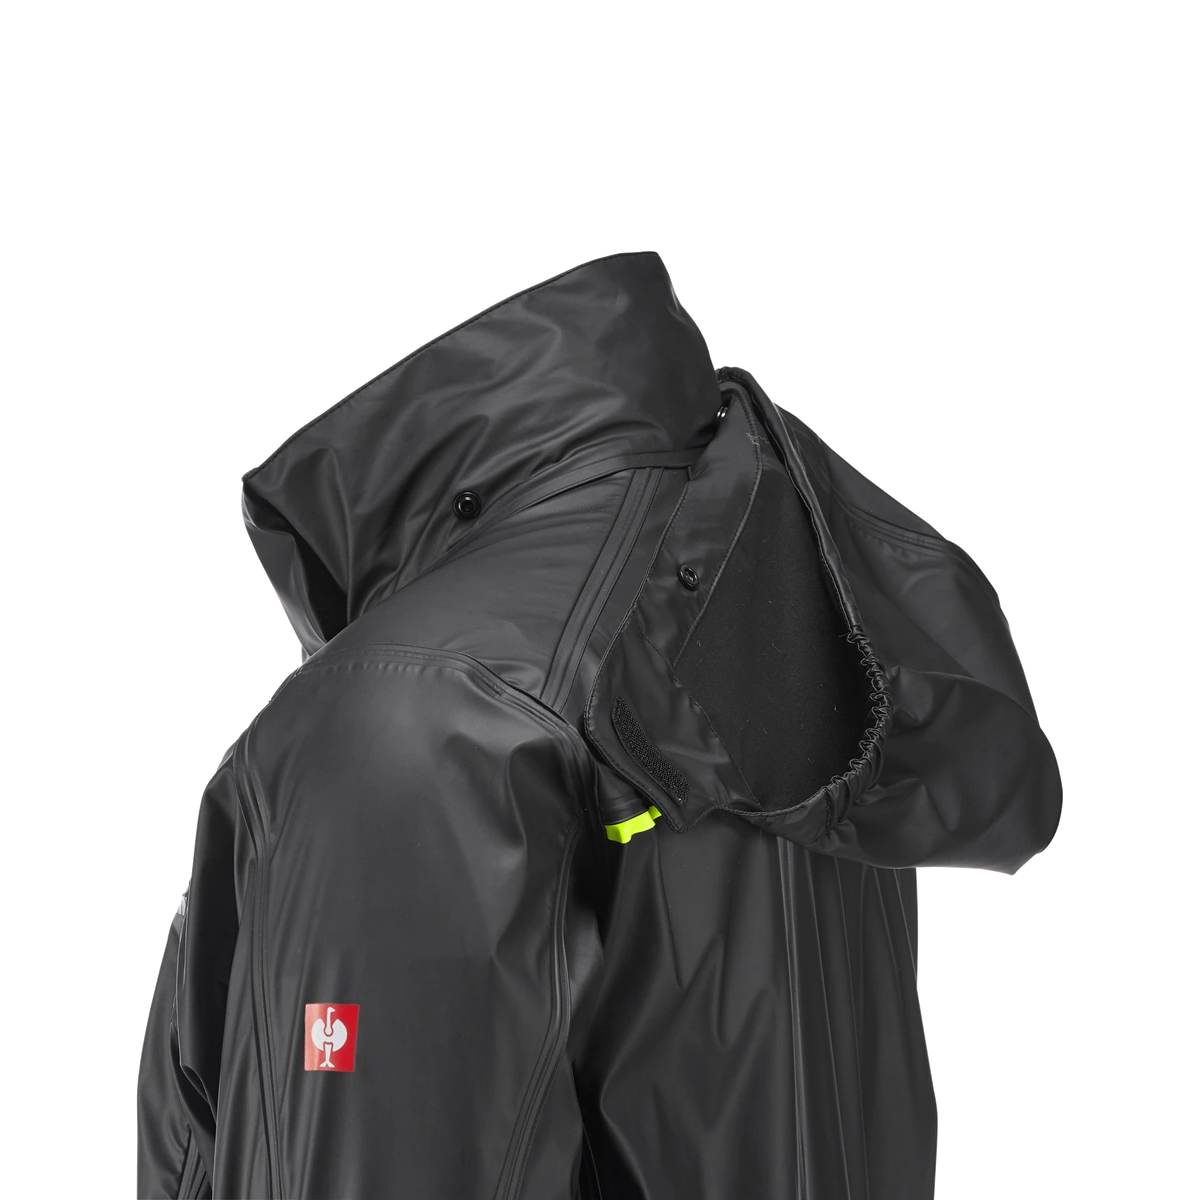 engelbert strauss Rain jacket e.s.motion 2020 superflex German Workwear